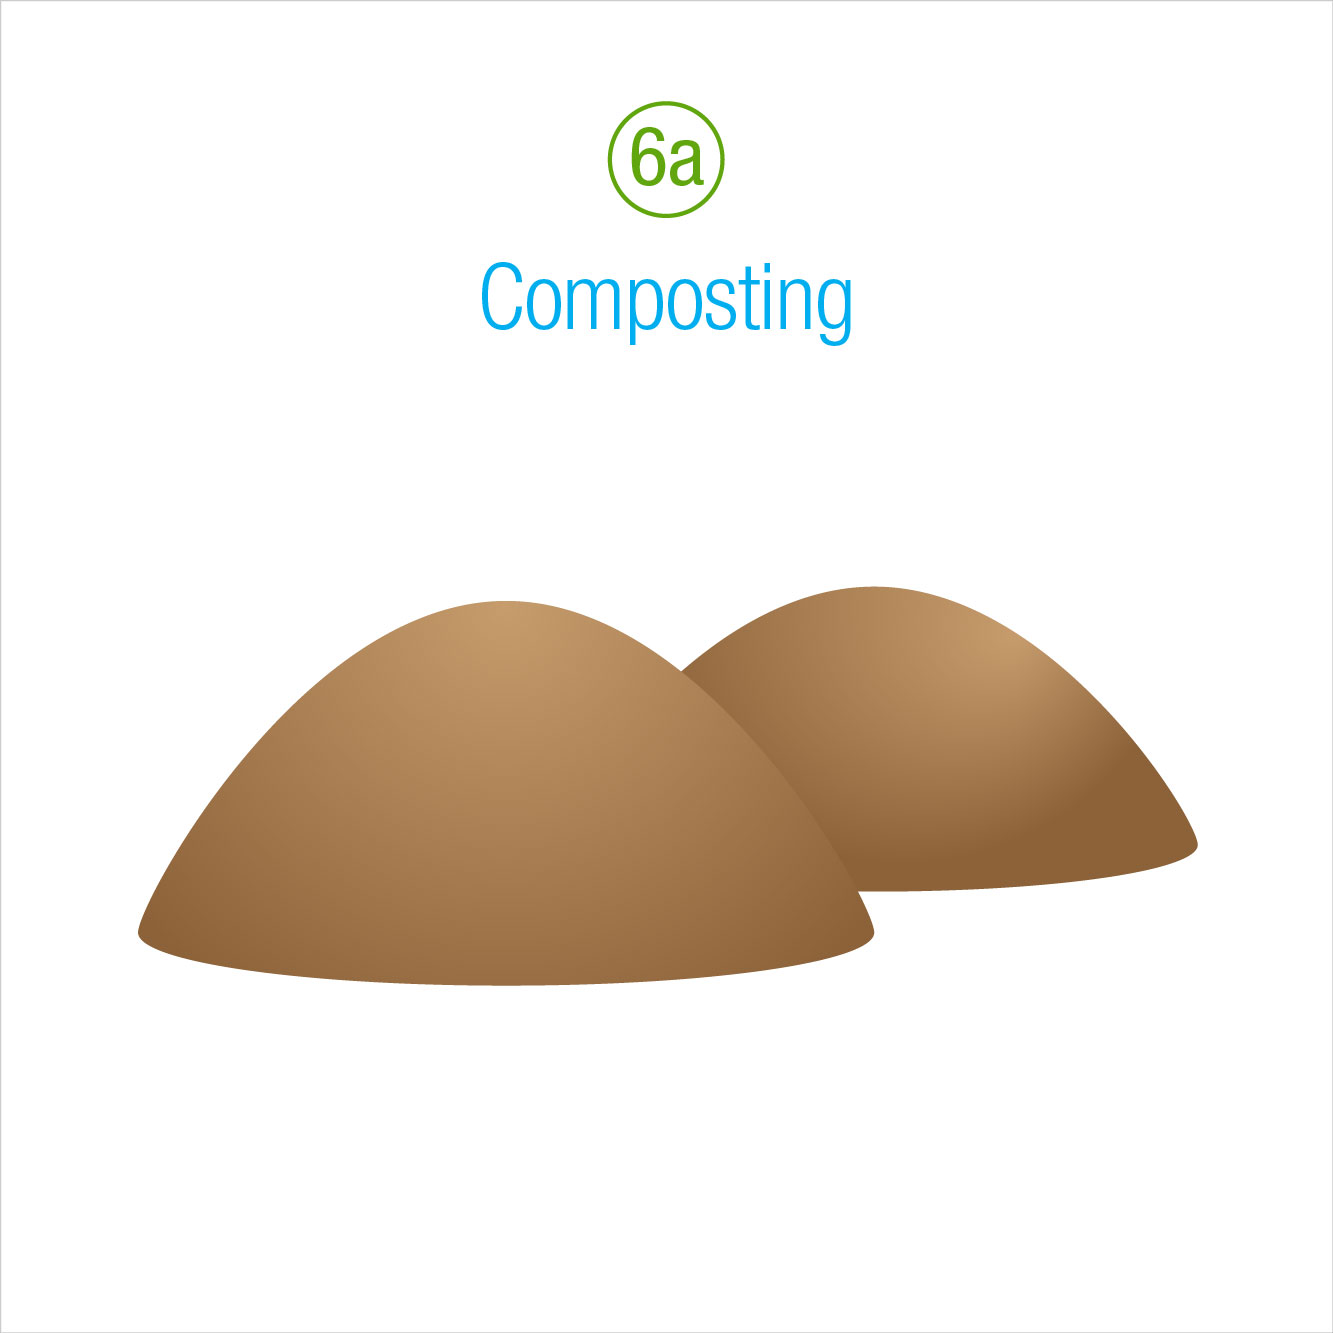 6a: Composting